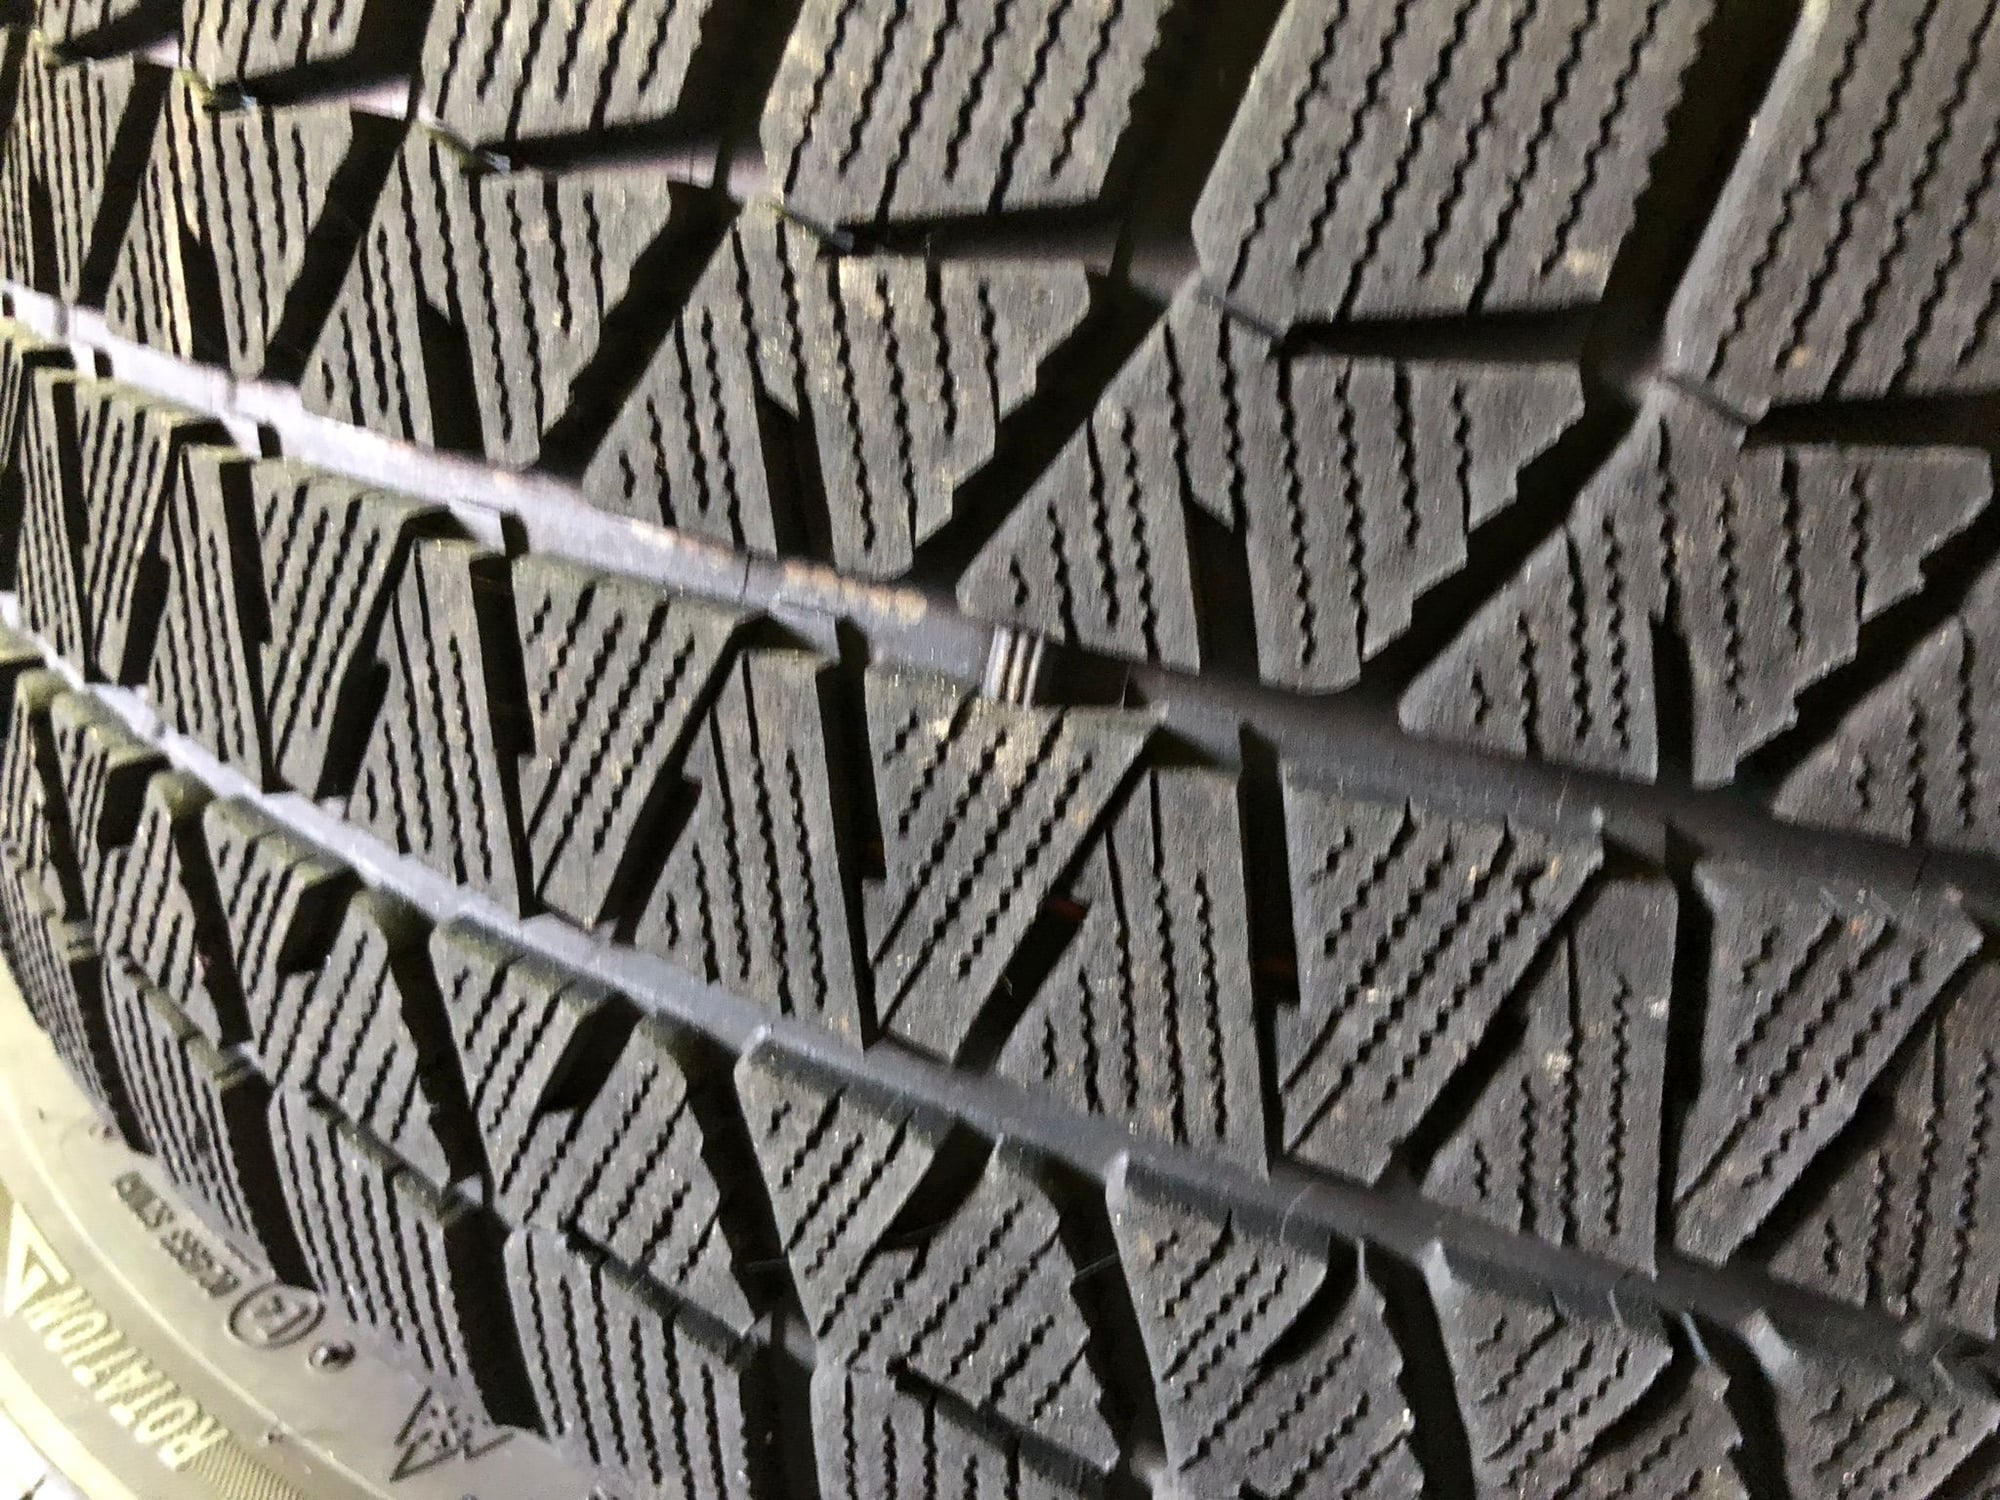 Wheels and Tires/Axles - W204 C63 Hoosier Drag Radials & Bridgestone Blizzak Winter - Used - 2008 to 2015 Mercedes-Benz C63 AMG - Boston, MA 02124, United States